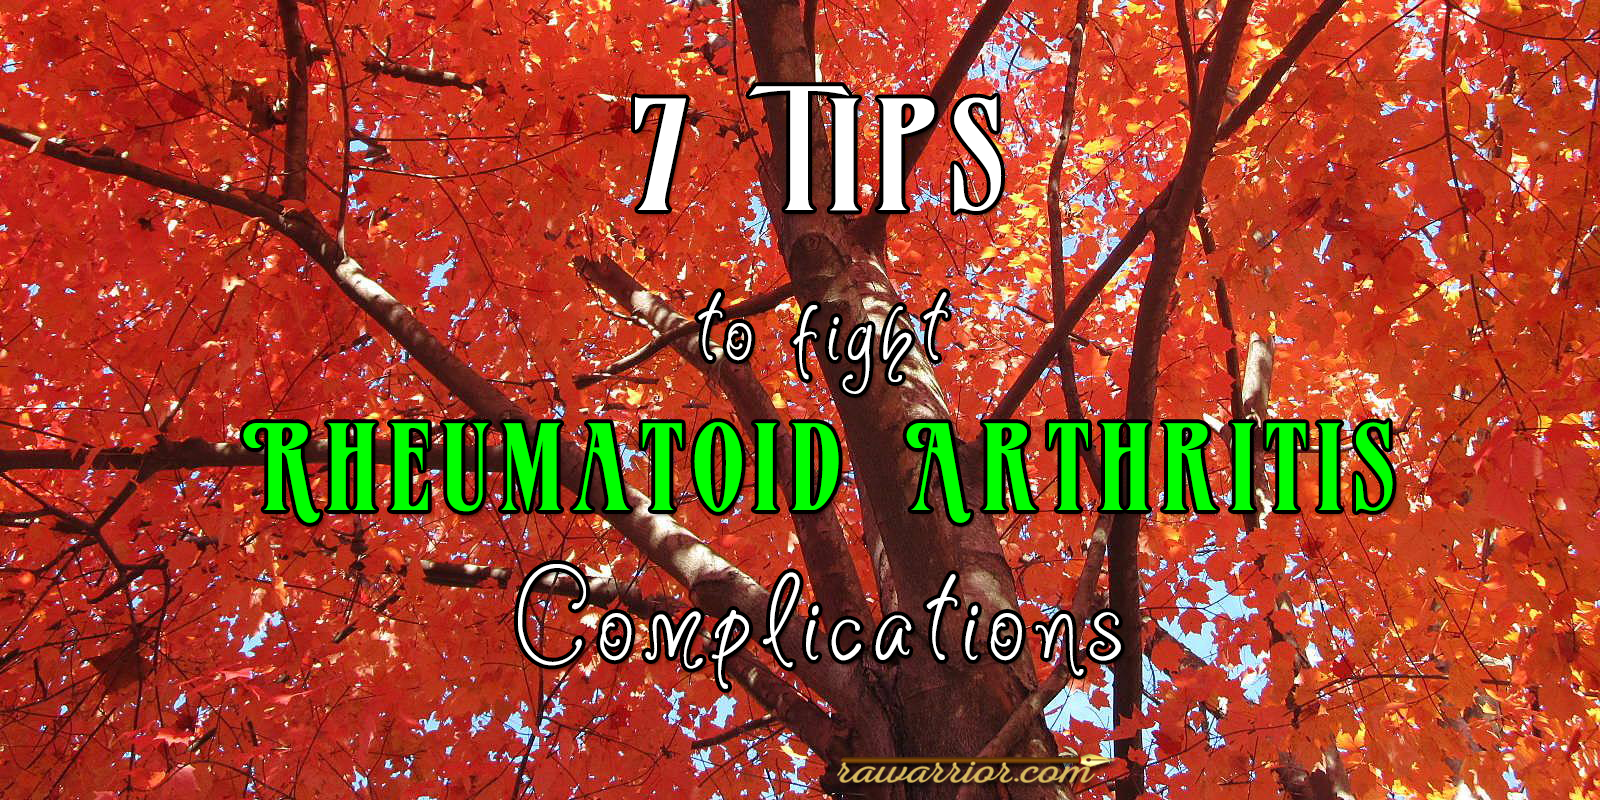 7 Tips for Rheumatoid Arthritis Complications